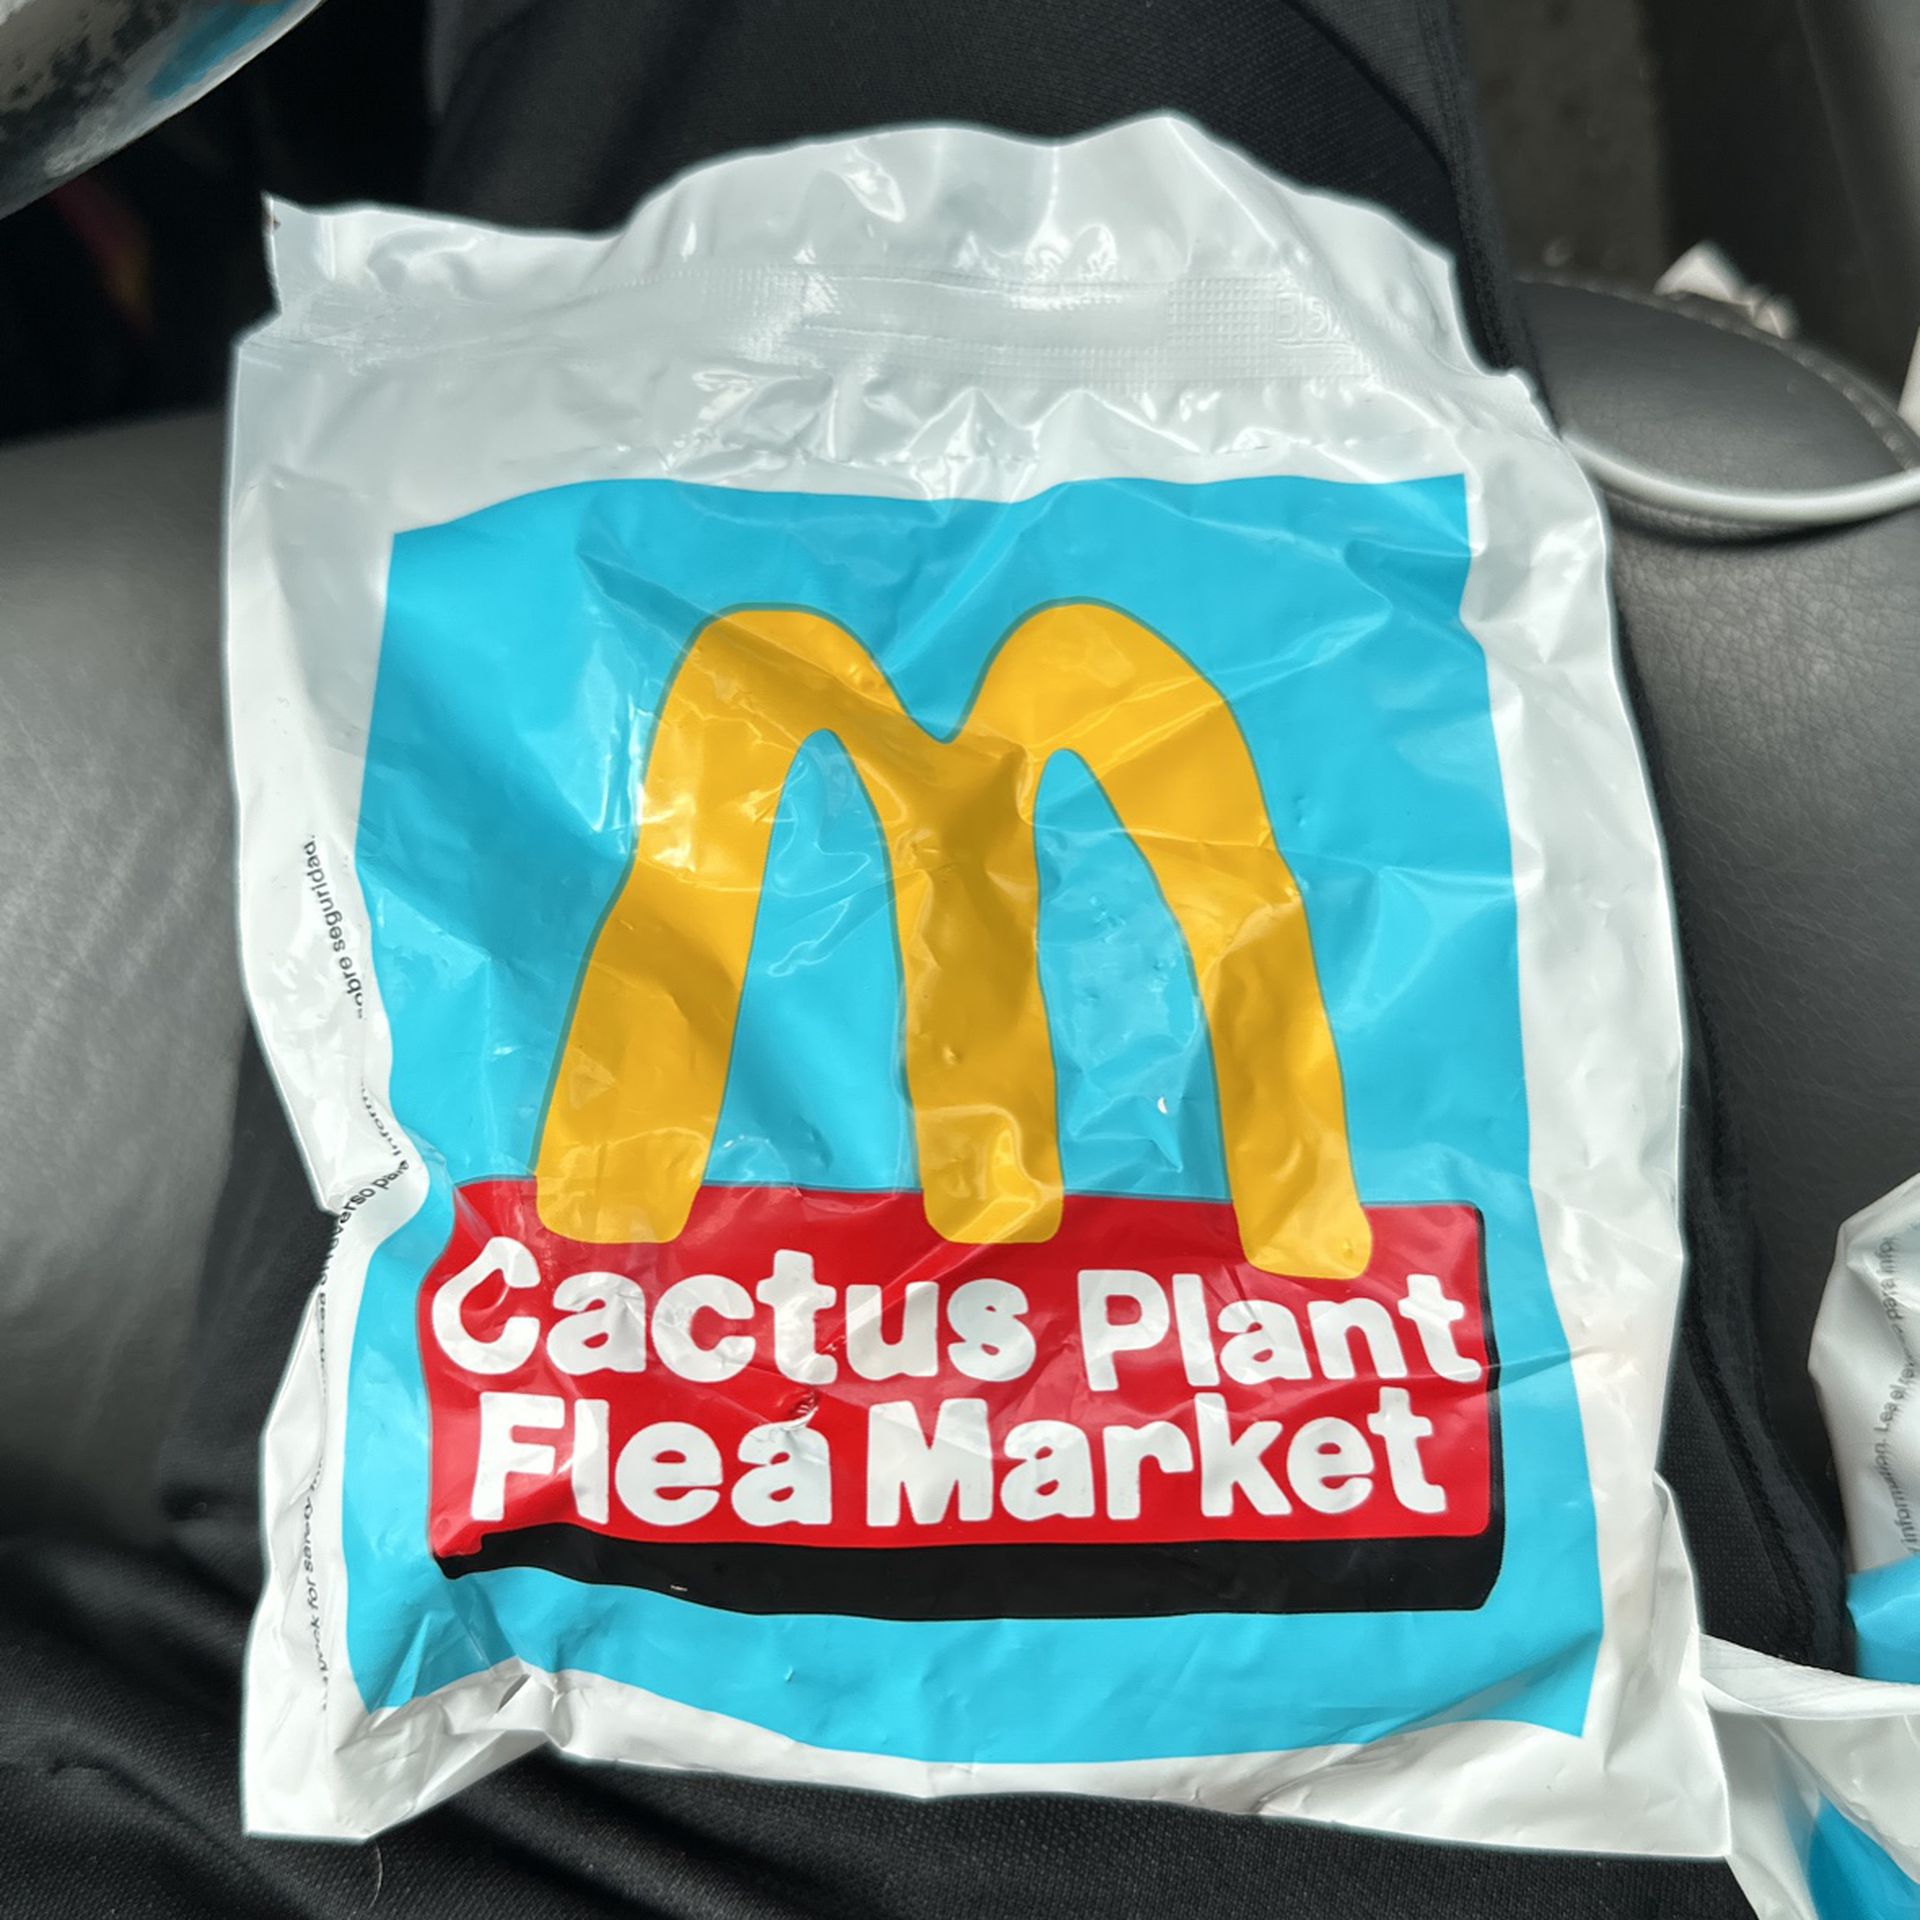 Cactus Plant Flea market McDonald’s Toy (Grimace) (Hamburglar)